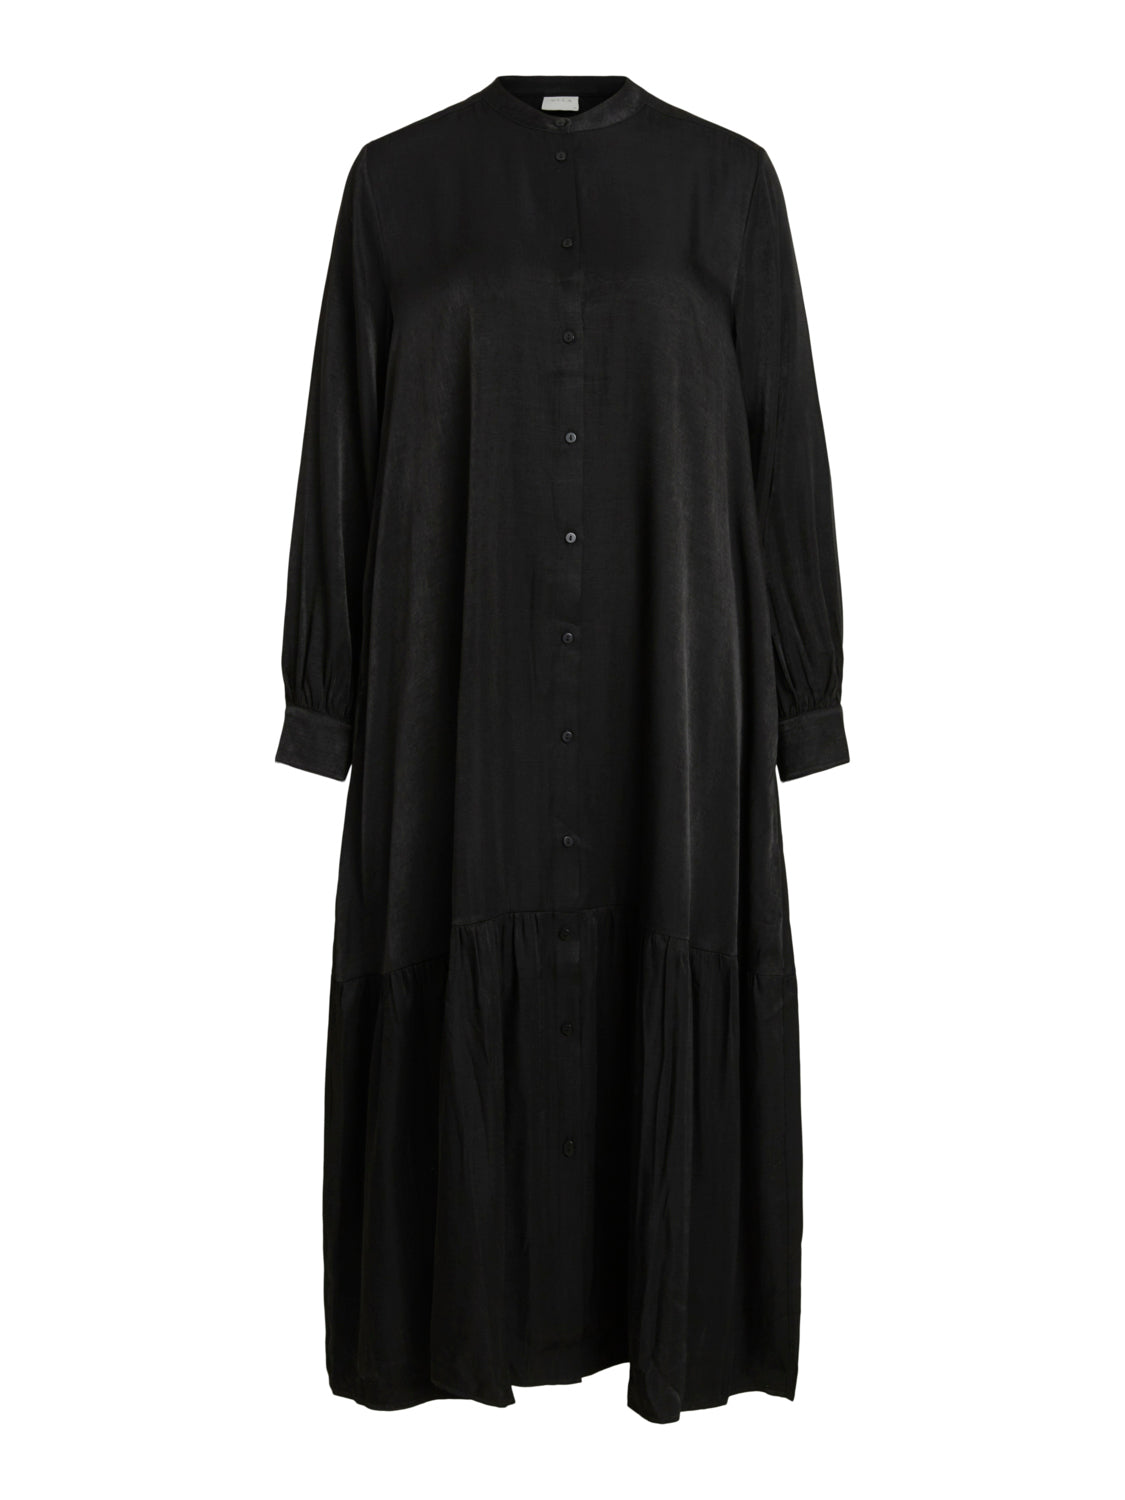 VIDOROTY Dress - Black